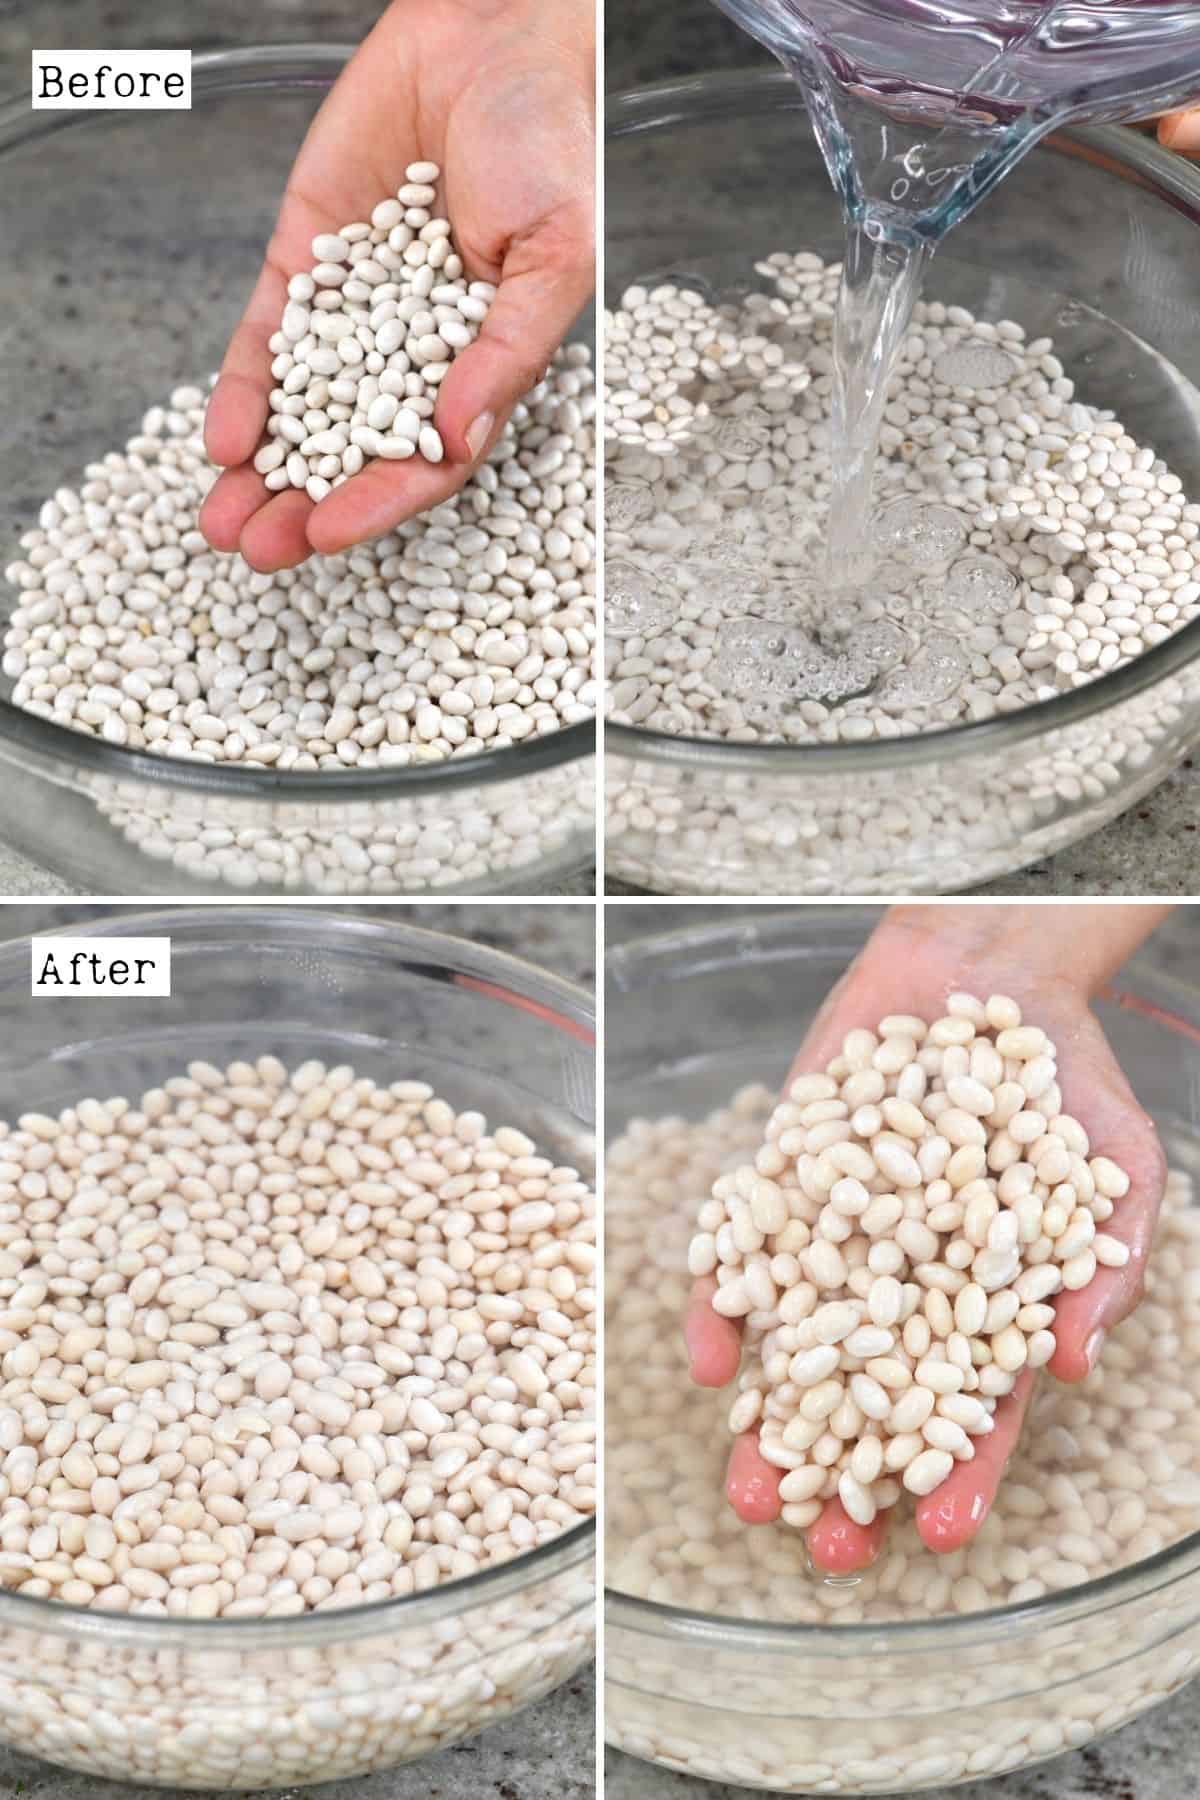 Steps for soaking beans